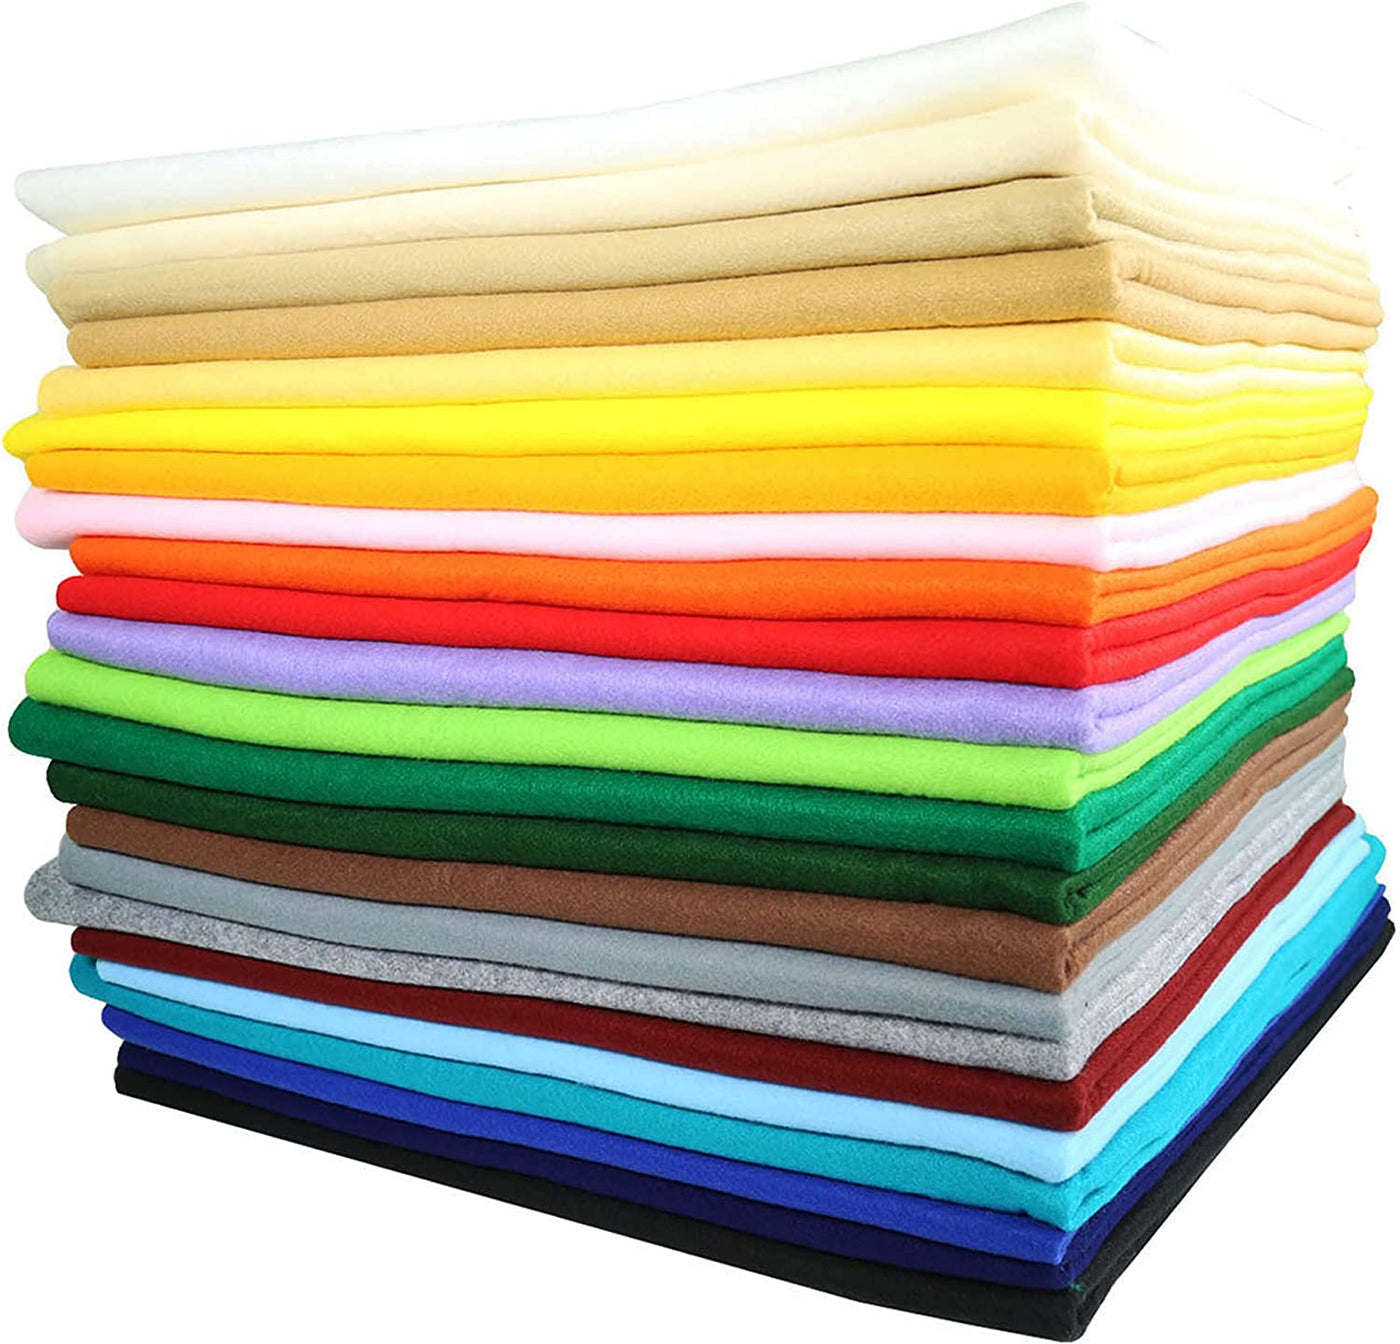 FabricLA 100% Acrylic Felt Fabric - Pre-Cut | 6x6 Inches | 36 pieces | Multi-Colors - FabricLA.com